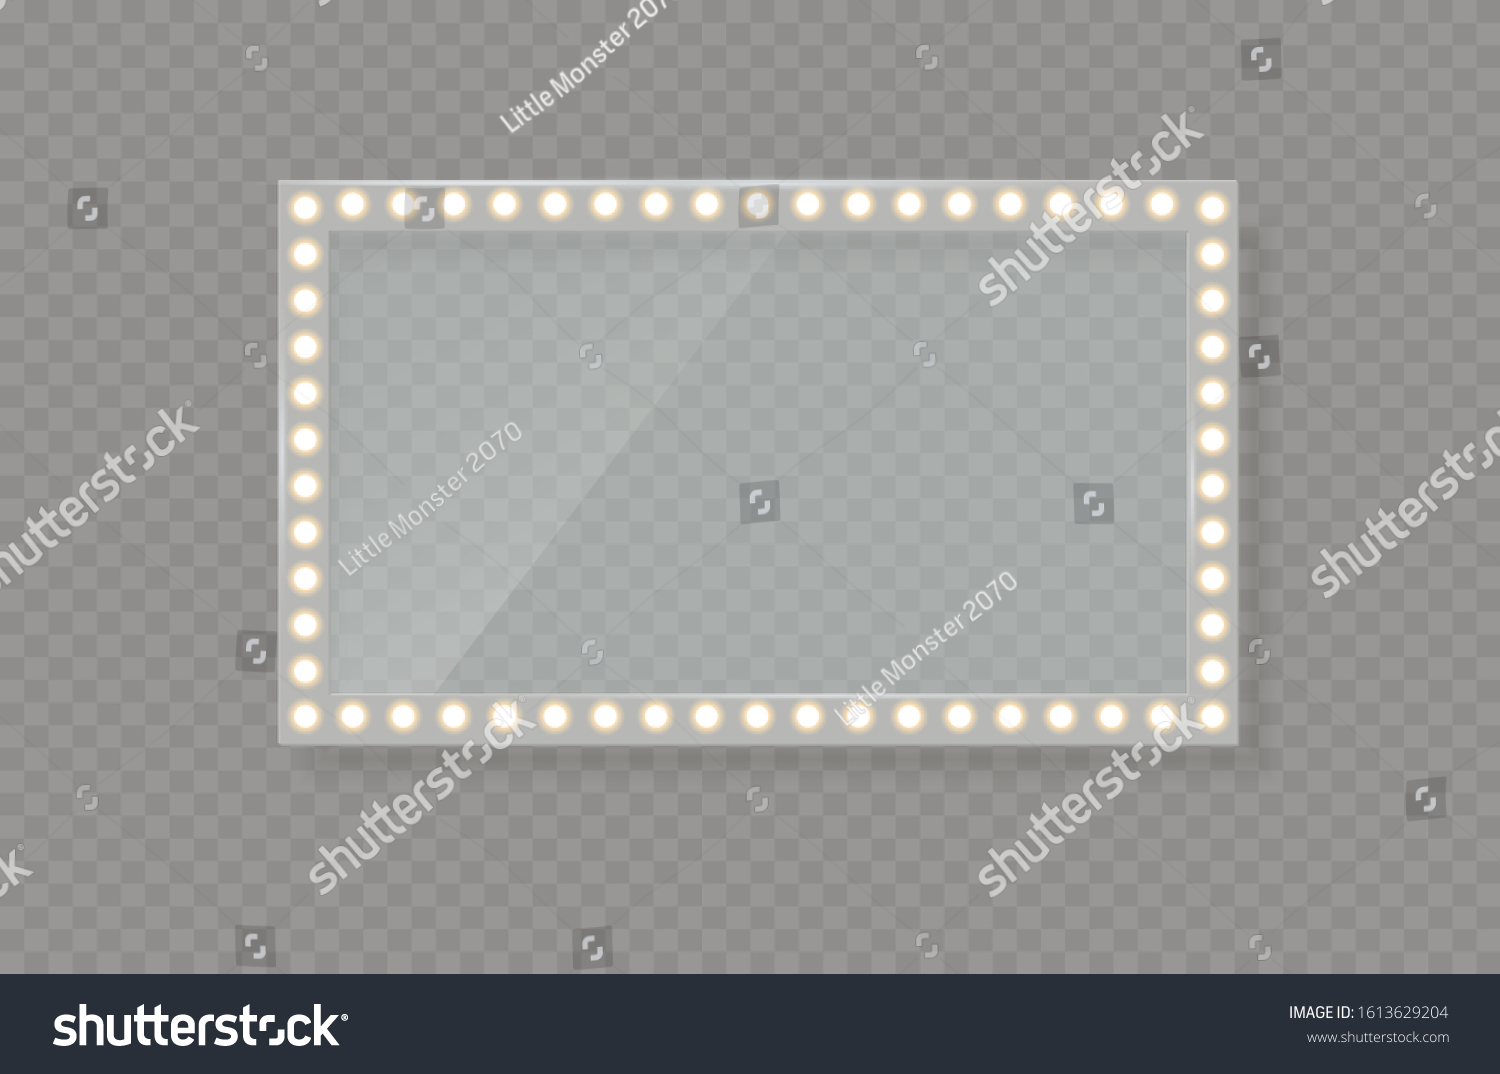 SVG of Mirror in frame with bright lights with light makeup lights in changing room or backroom. Vector illustration, EPS 10. svg